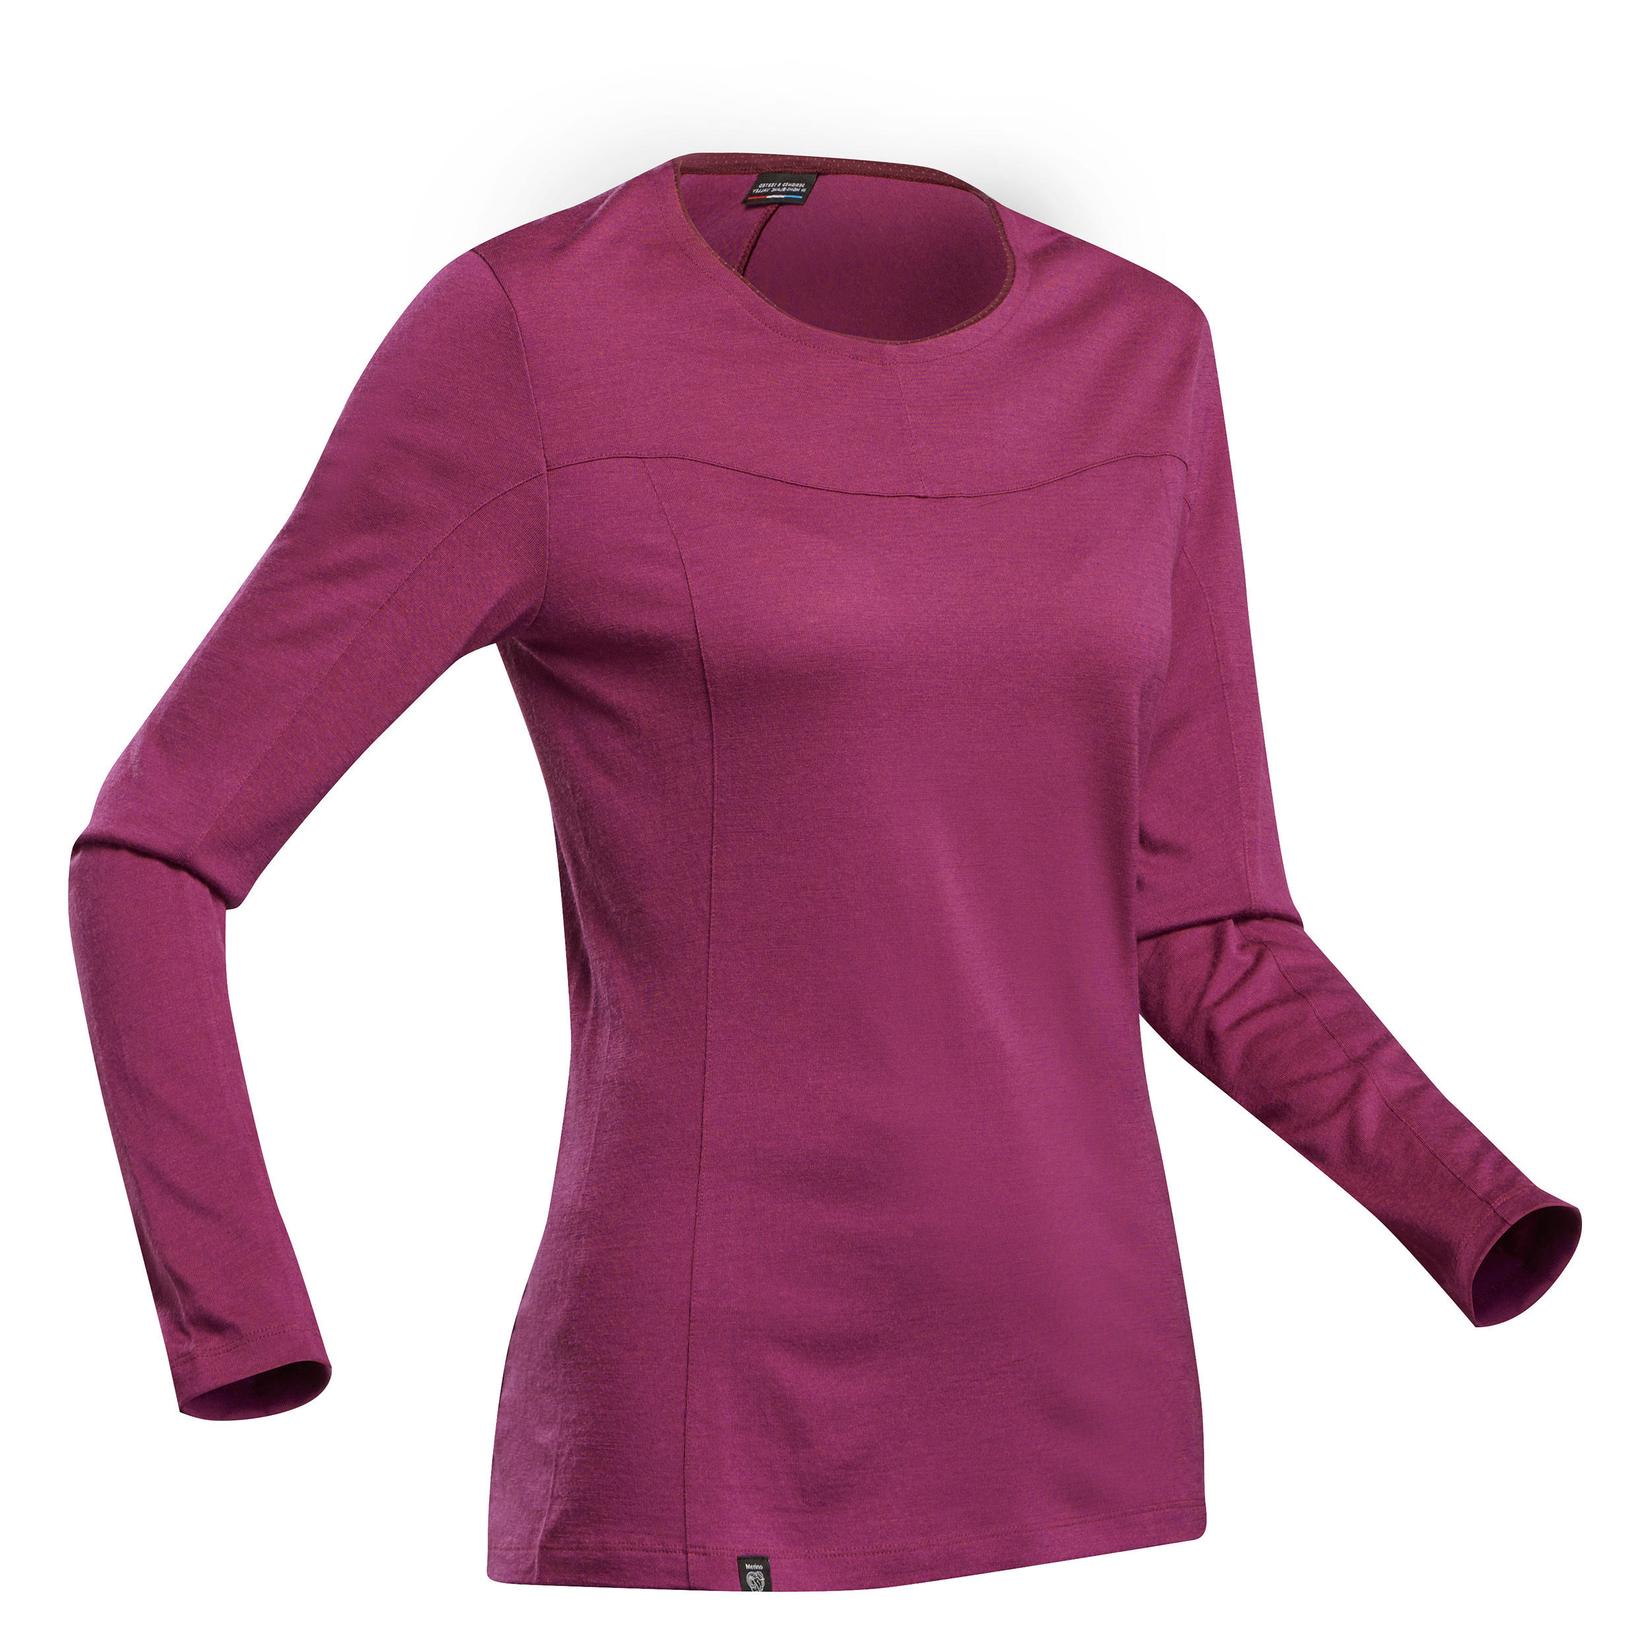 Women Trekking Long-Sleeved T-Shirt Forclaz Trek500 Merino - Purple offers at S$ 39.9 in Decathlon